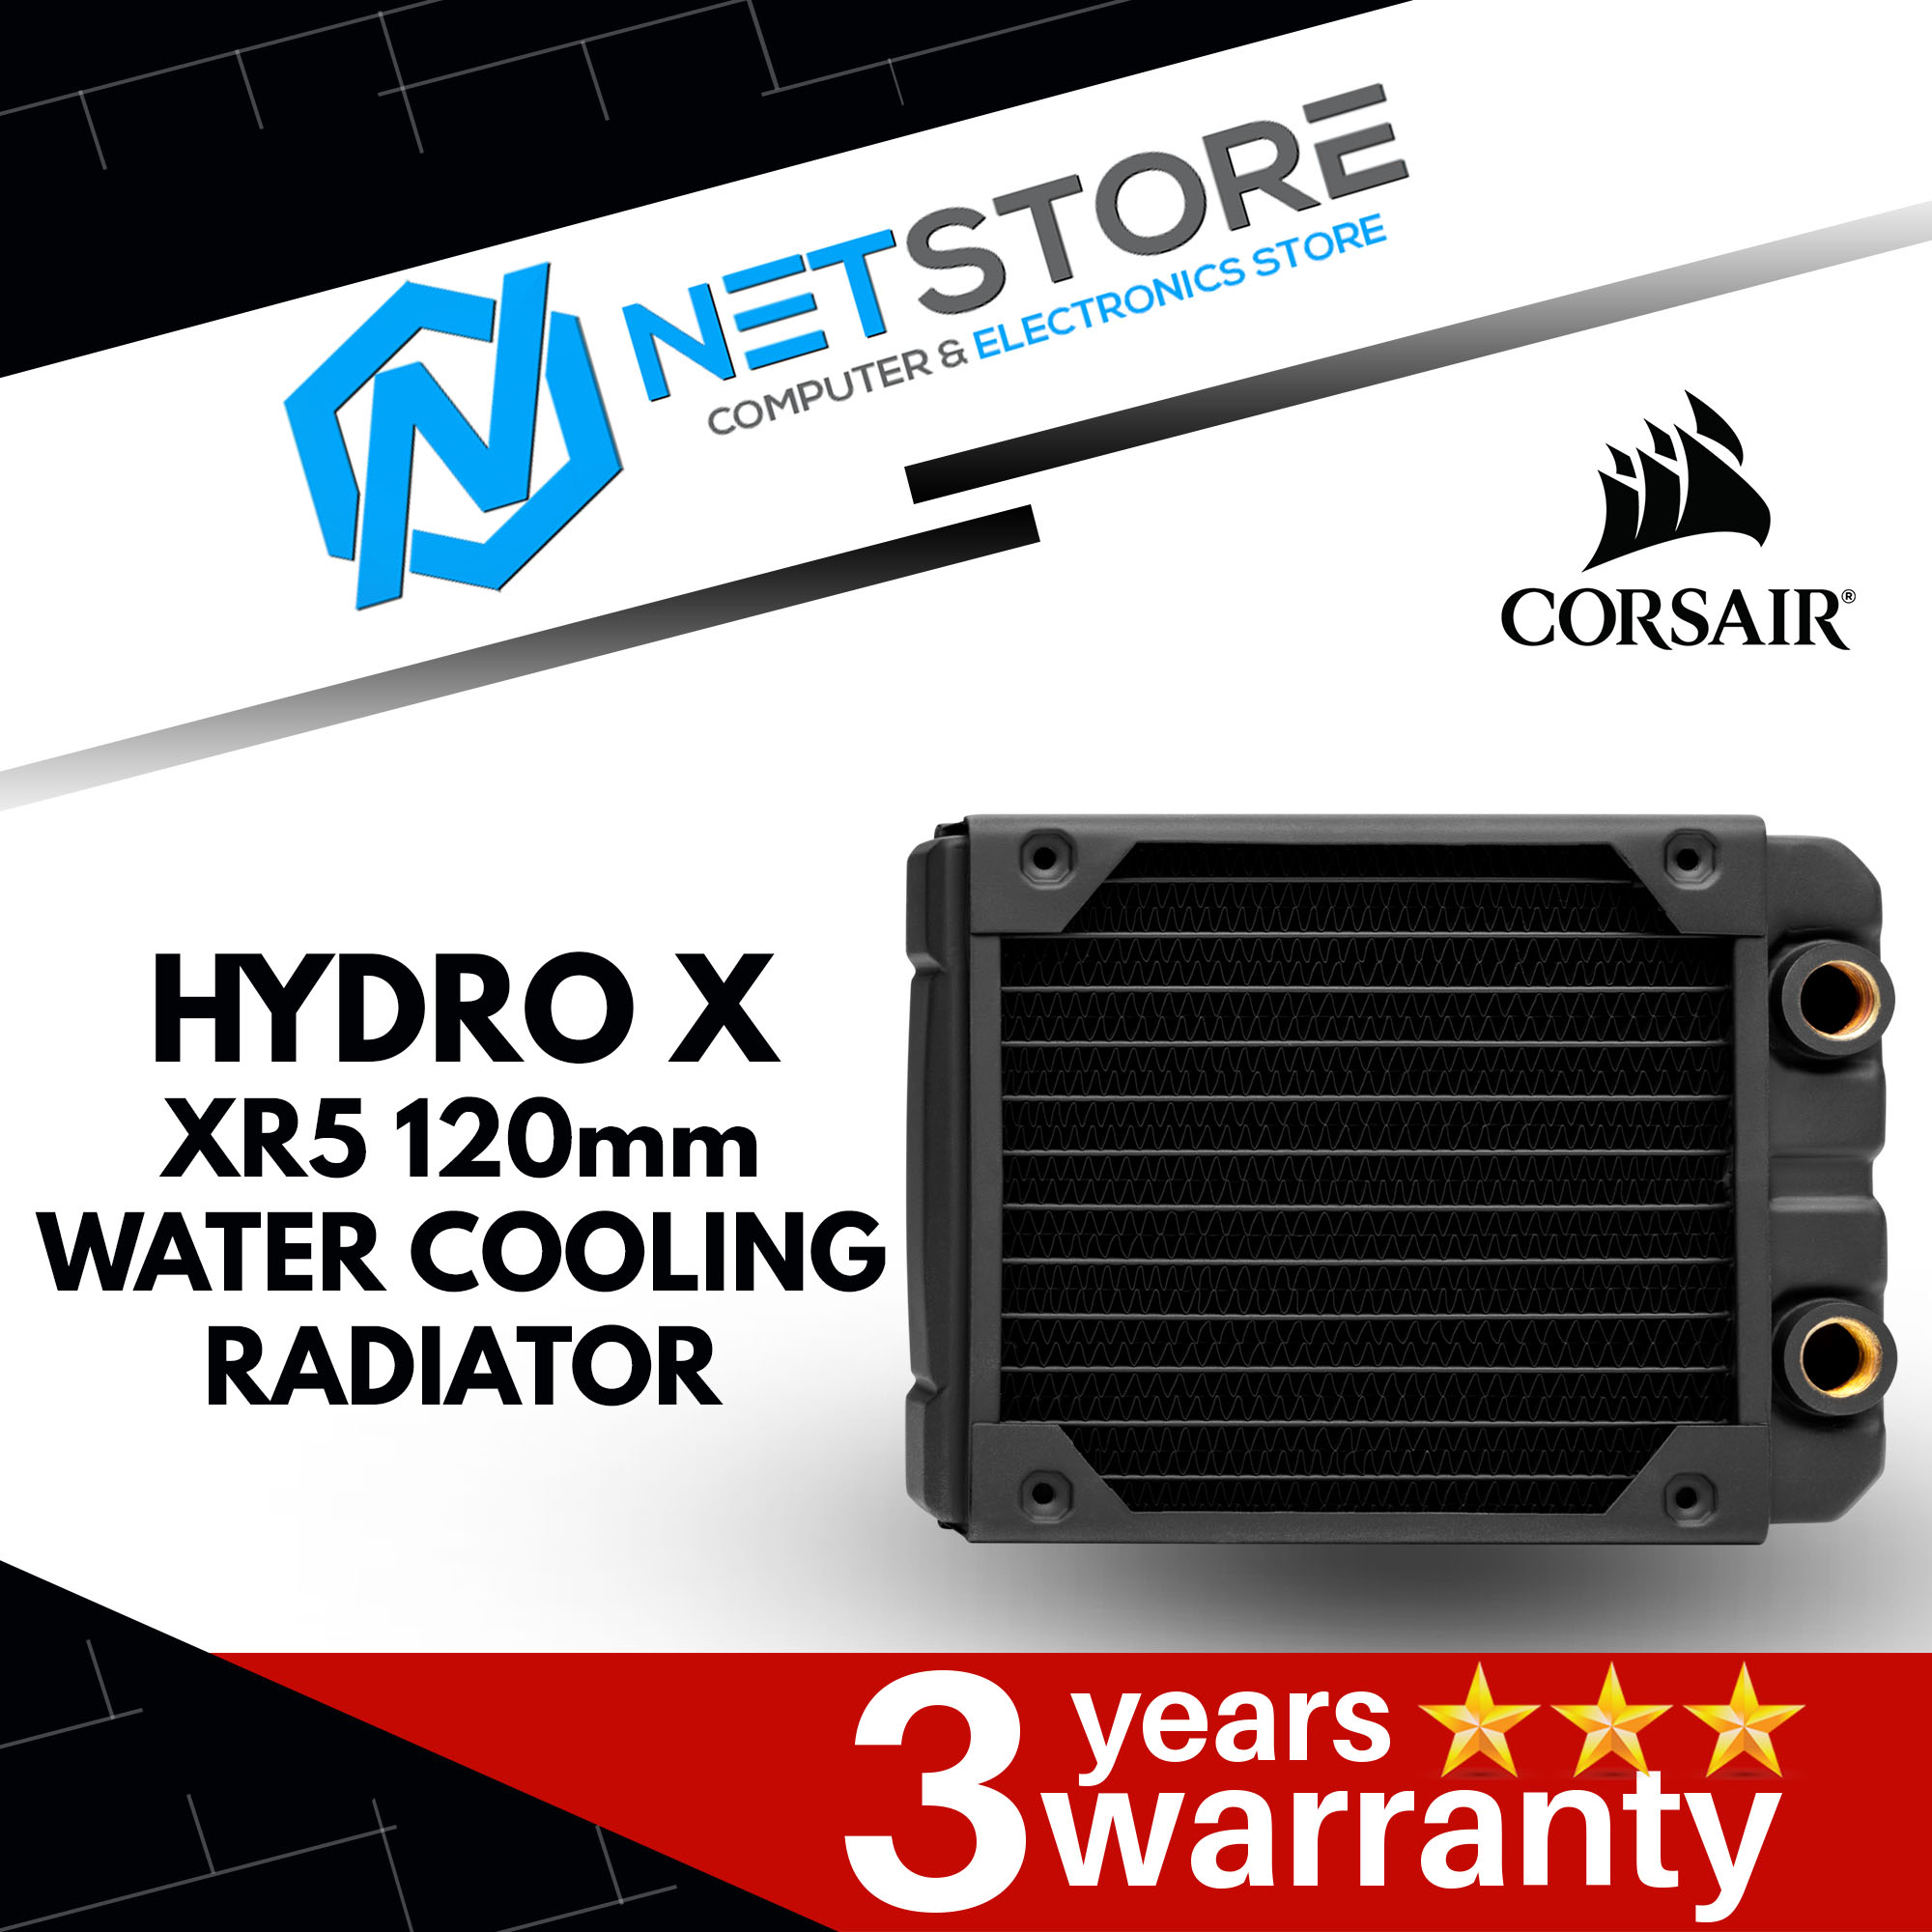 CORSAIR HYDRO X SERIES XR5 120mm WATER COOLING RADIATOR CX-9030001-WW